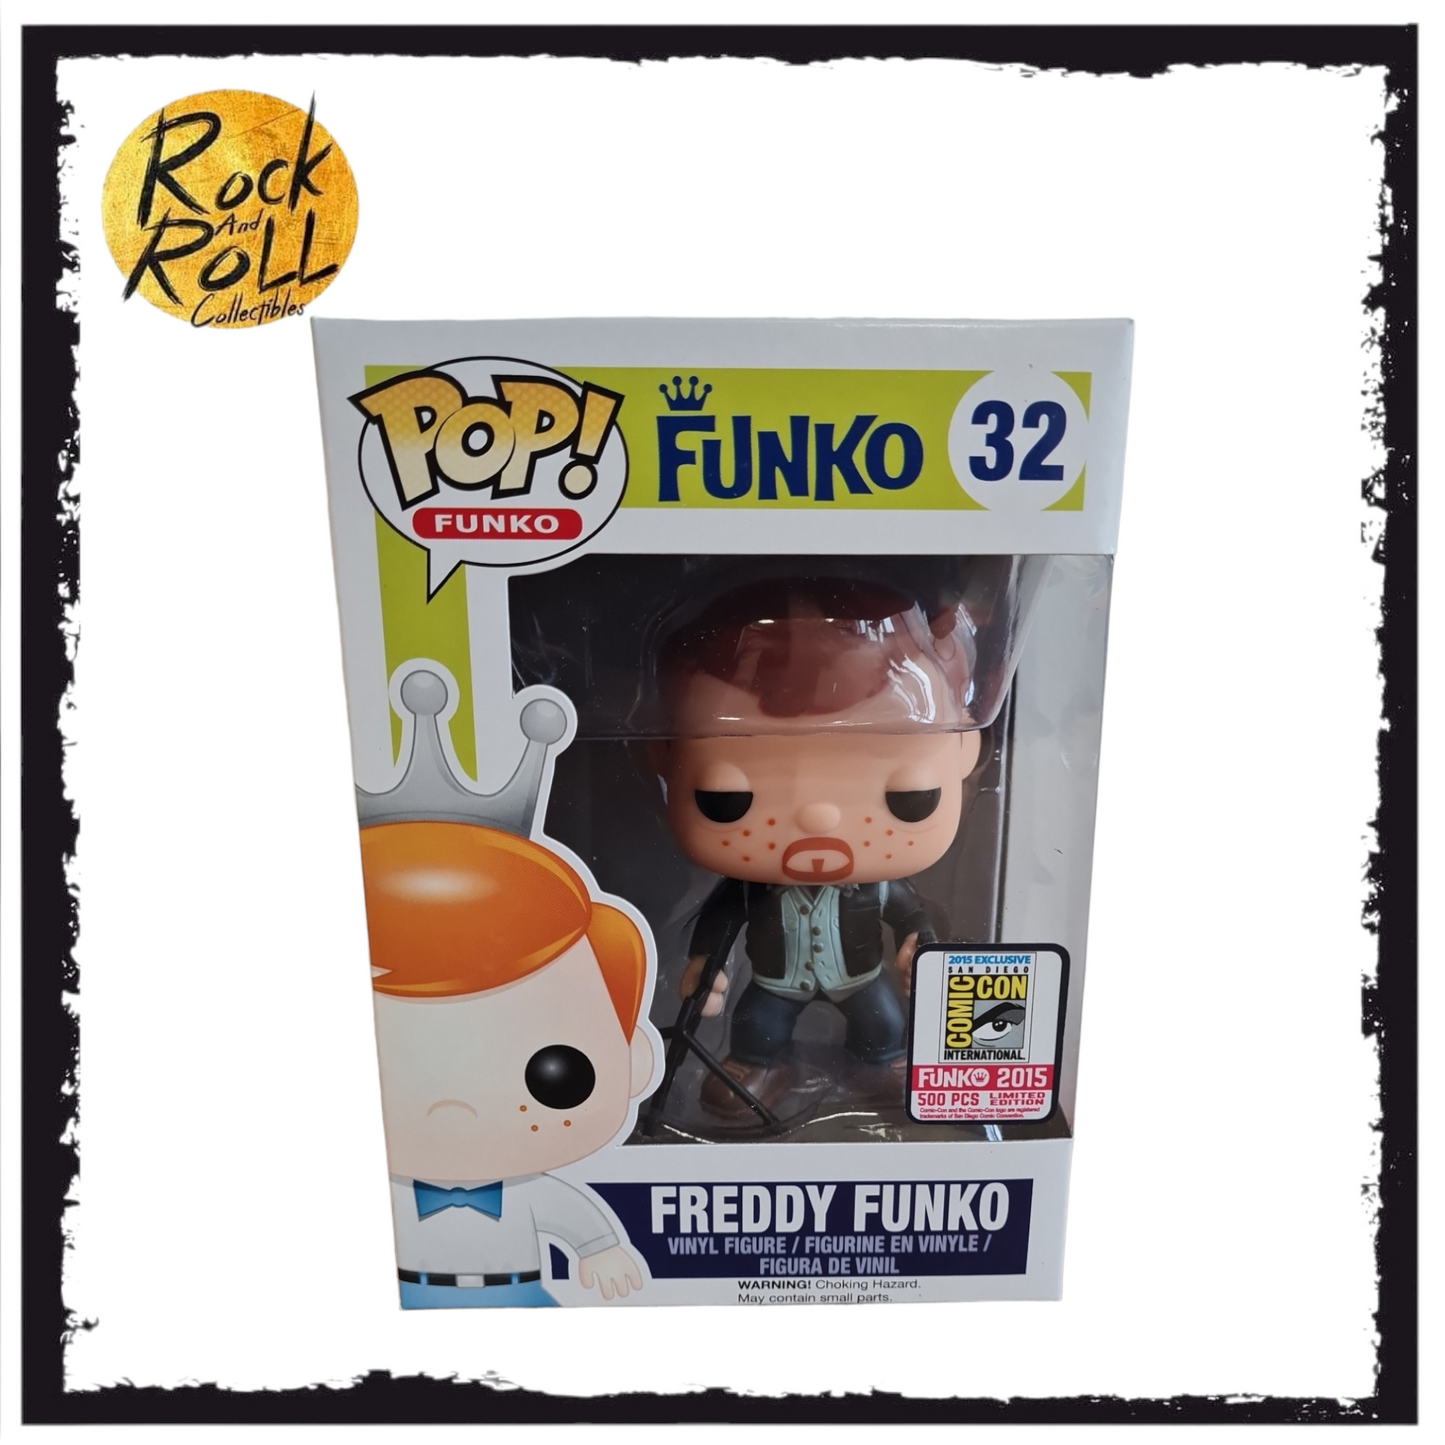 Freddy Funko as Daryl Dixon - Walking Dead - SDCC 2015 Funko Pop! #32 LE500pcs. Condition 9+/10